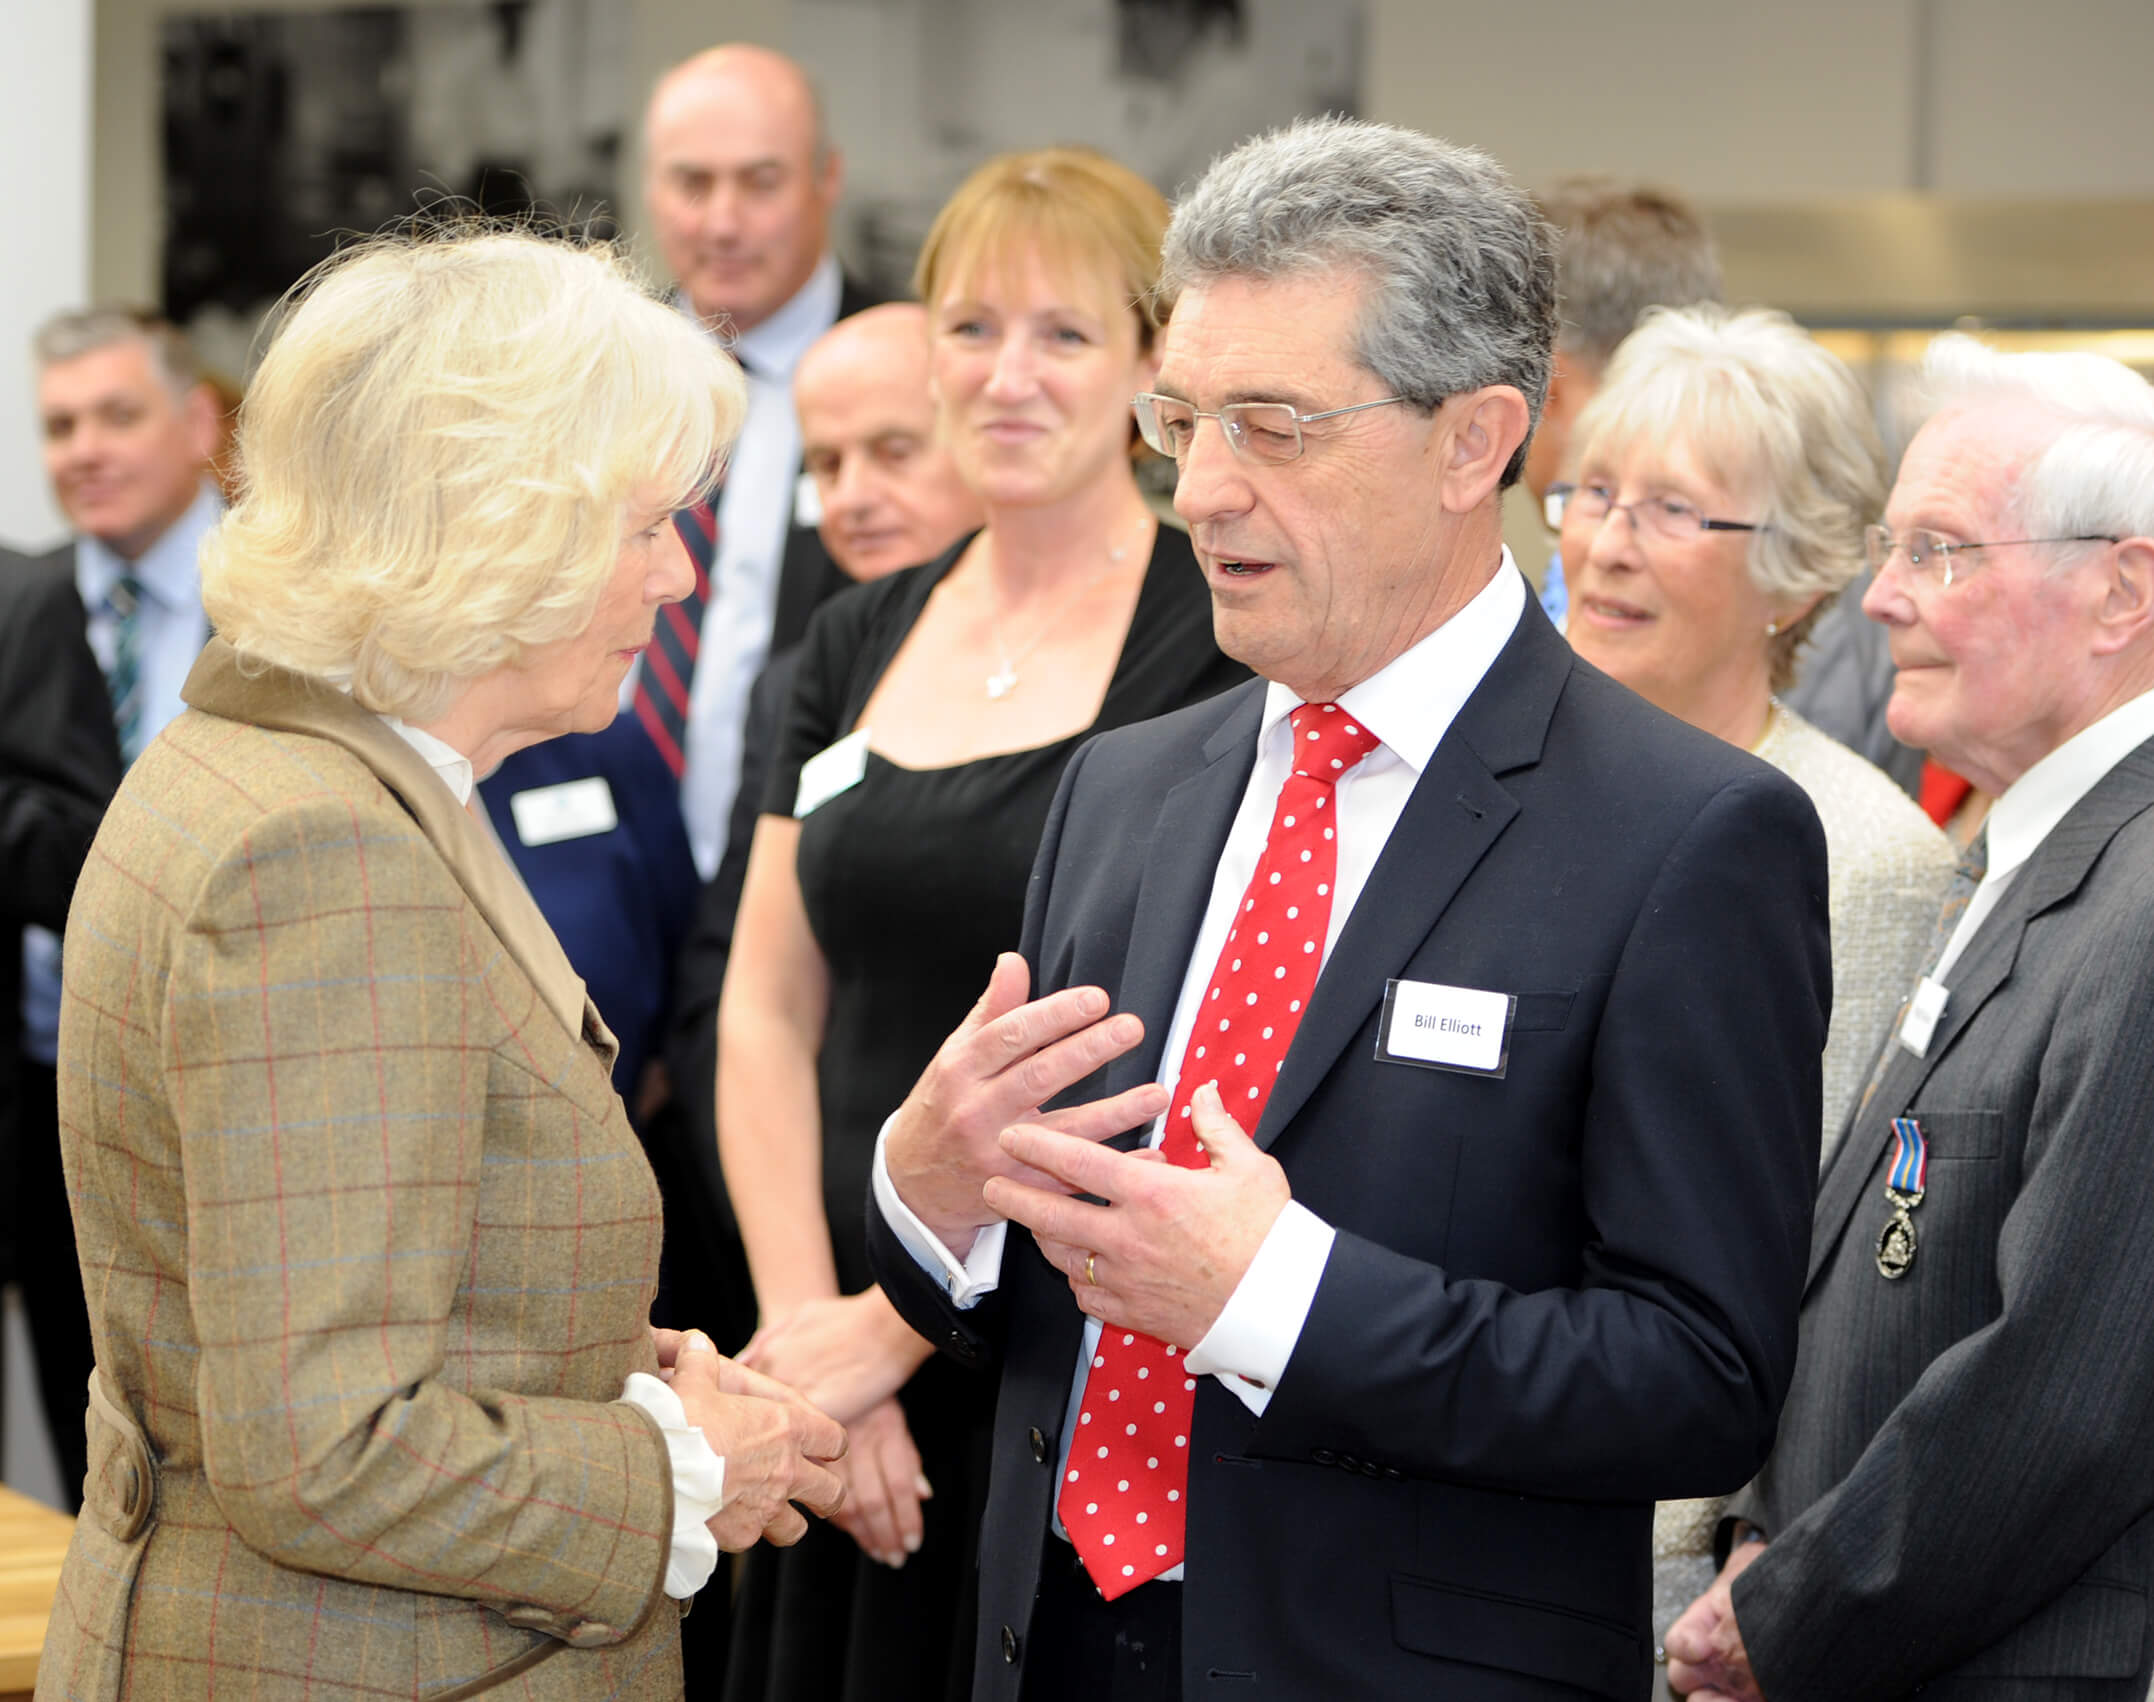 Photo of Bill Elliott being presented to HRH Duchess of Cornwall